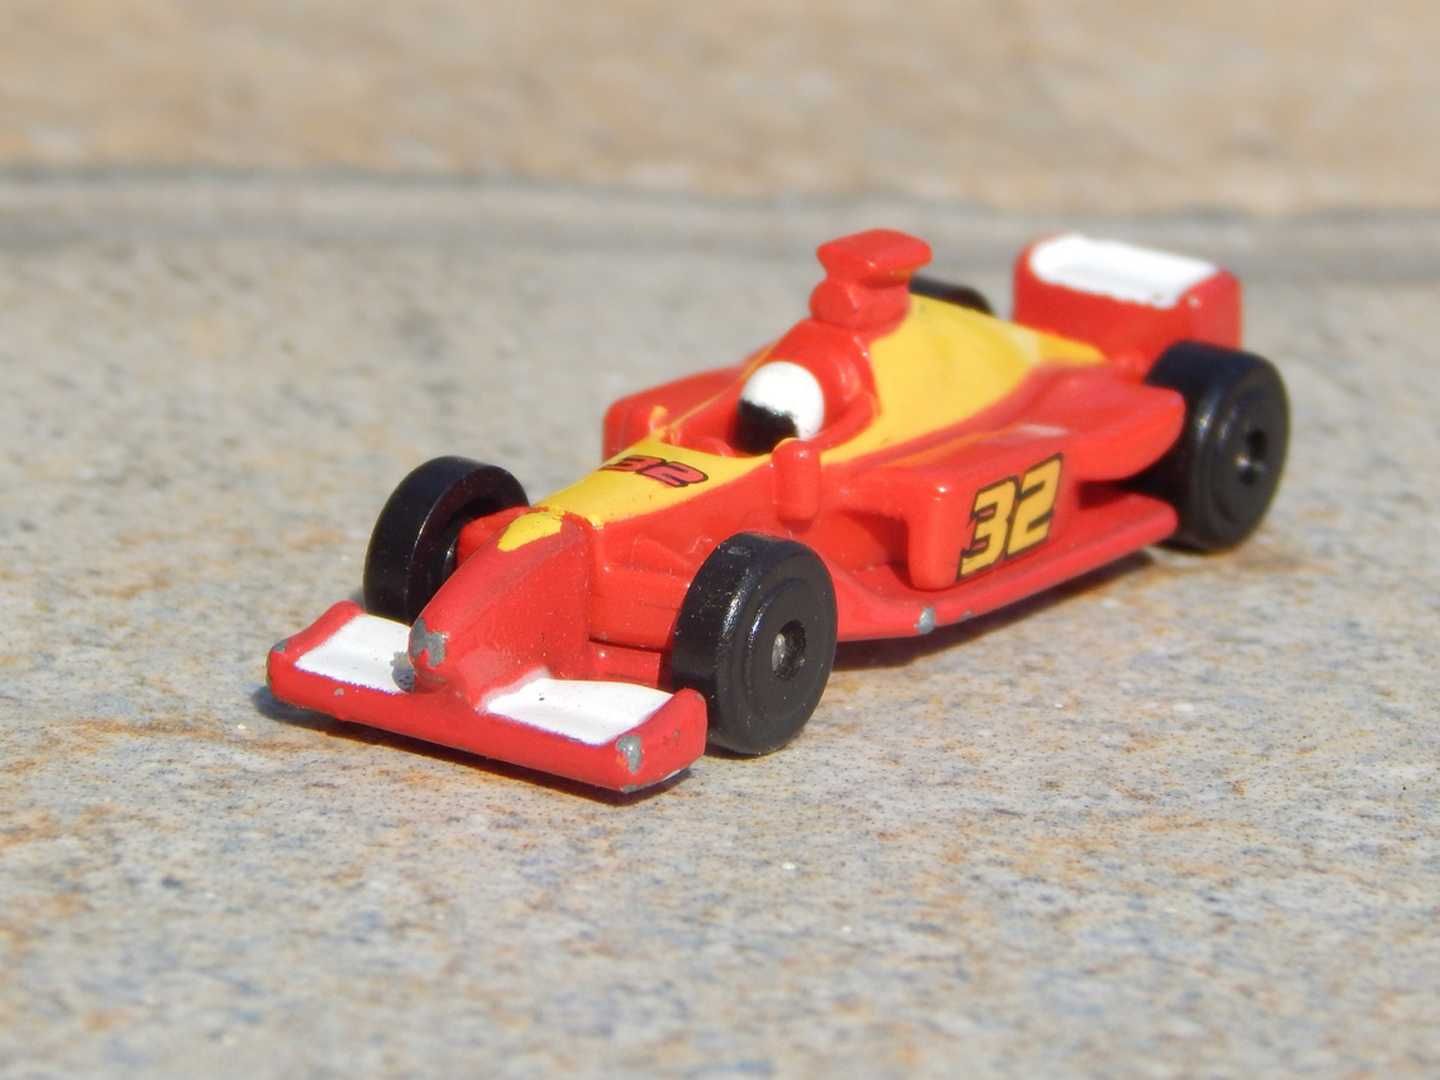 Macheta masina Formula 1 Ferrari 1999 Hasbro Micro Machines 1999 nr 32